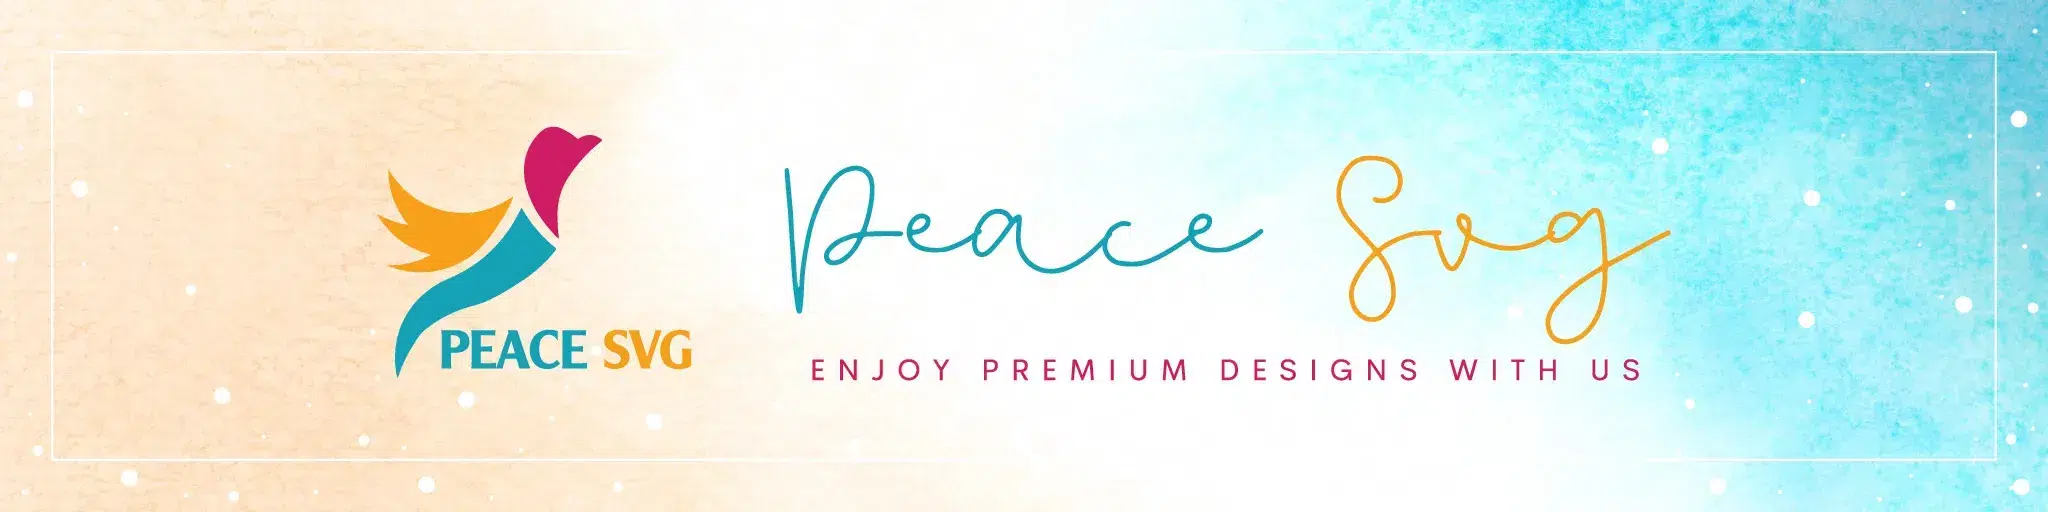 Banner PeaceSVG